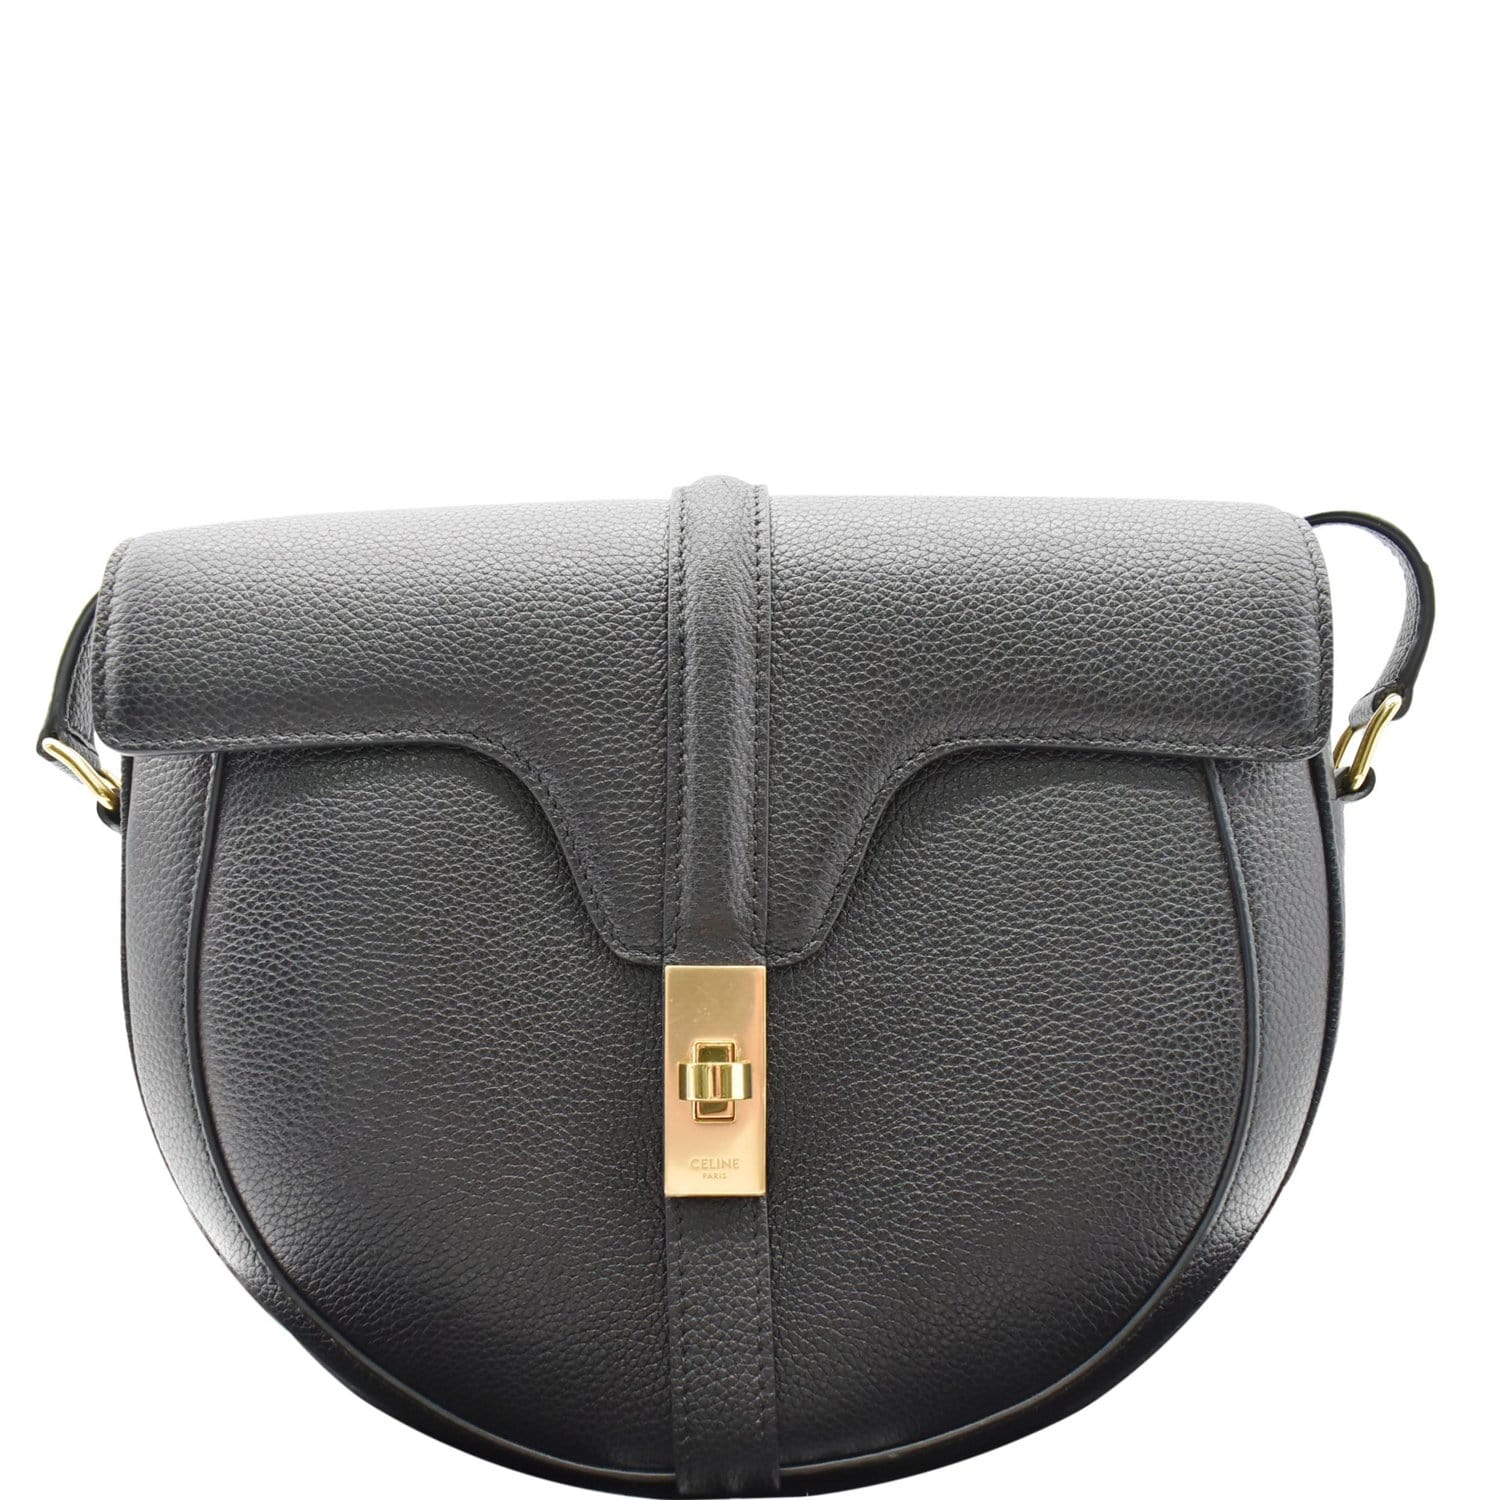 Sac seau leather handbag Celine Brown in Leather - 35536623